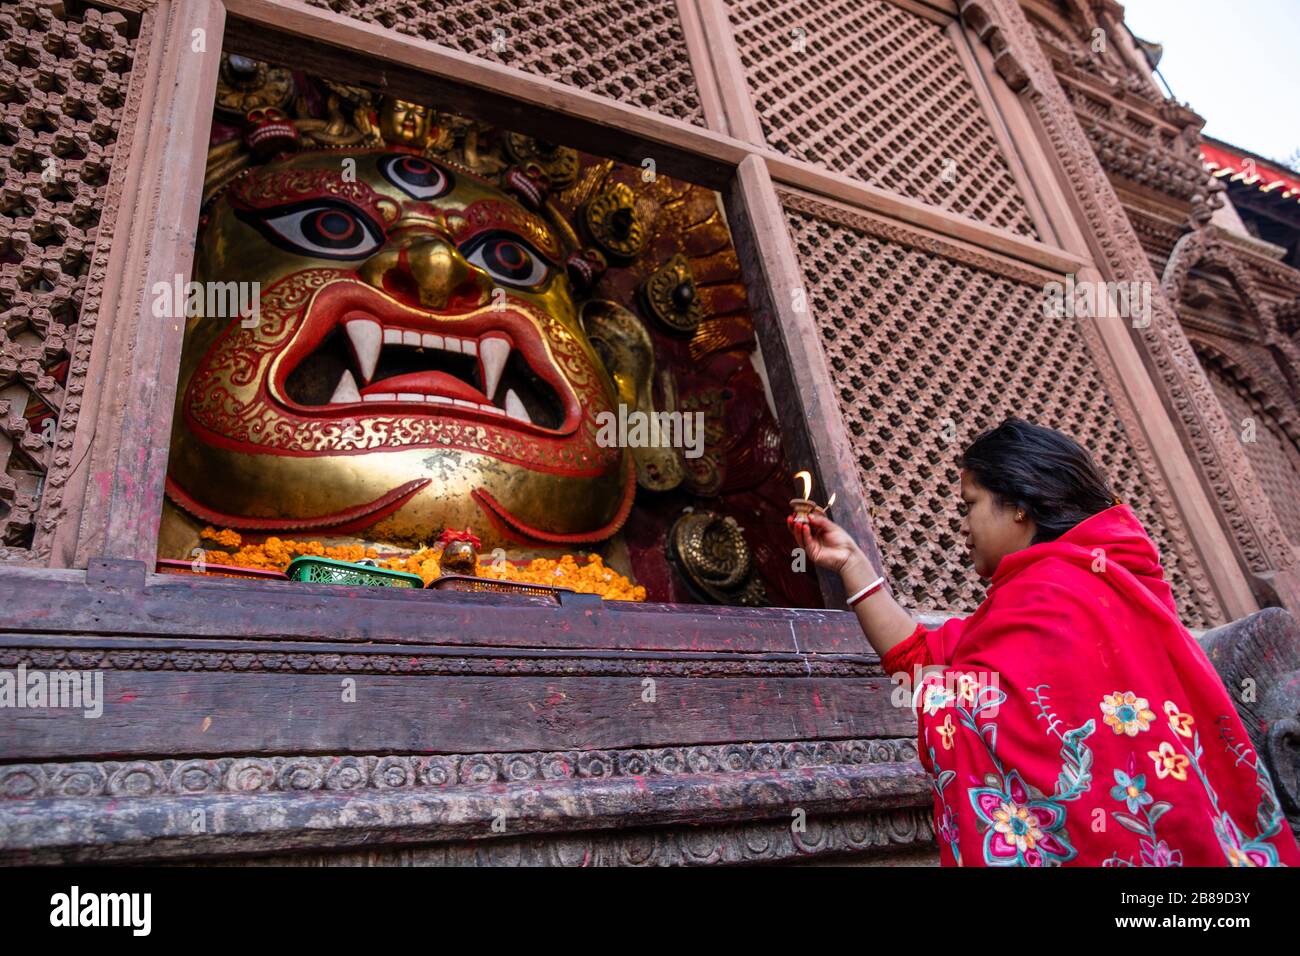 Hindu-Frau, die Bhairab rituelle Opfergabe im Jagannath Tempel in Kathmandu, Nepal, macht Stockfoto